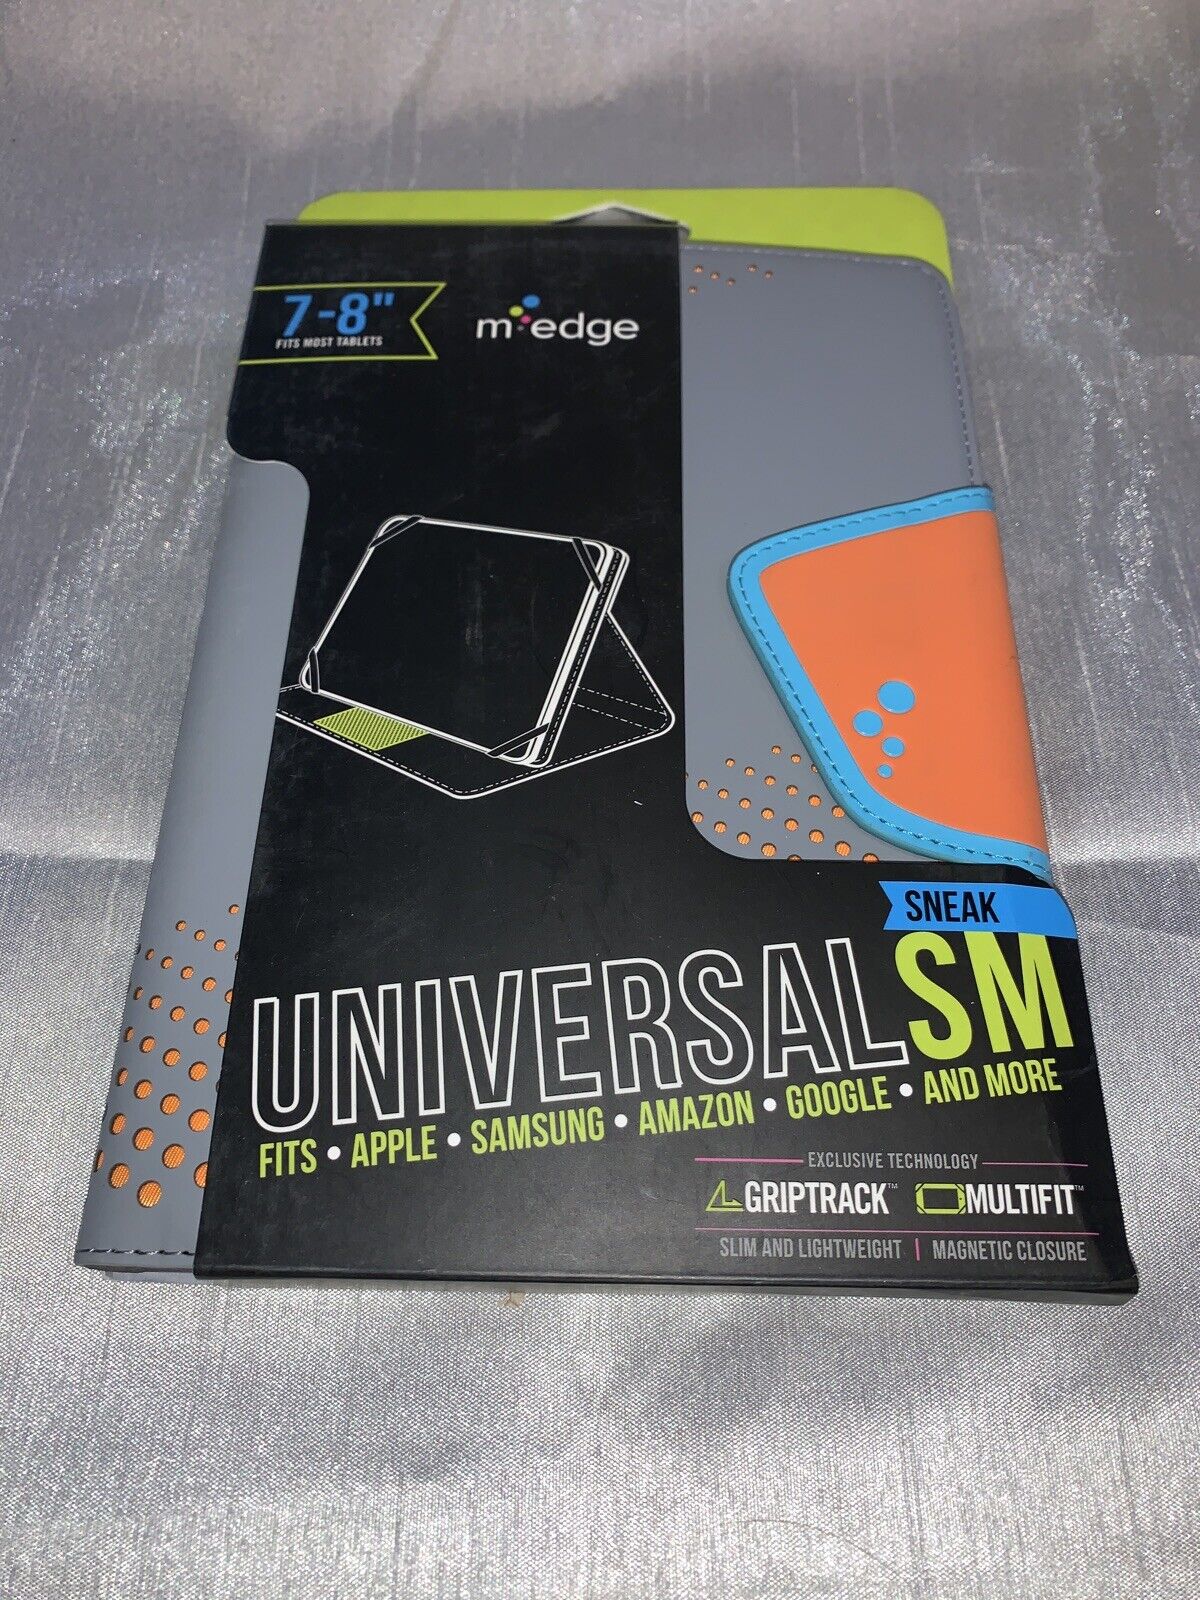 M-Edge Universal SM Sneak Folio - 7-8” tablets (Apple,Samsung,Amazon,Google,LG,.